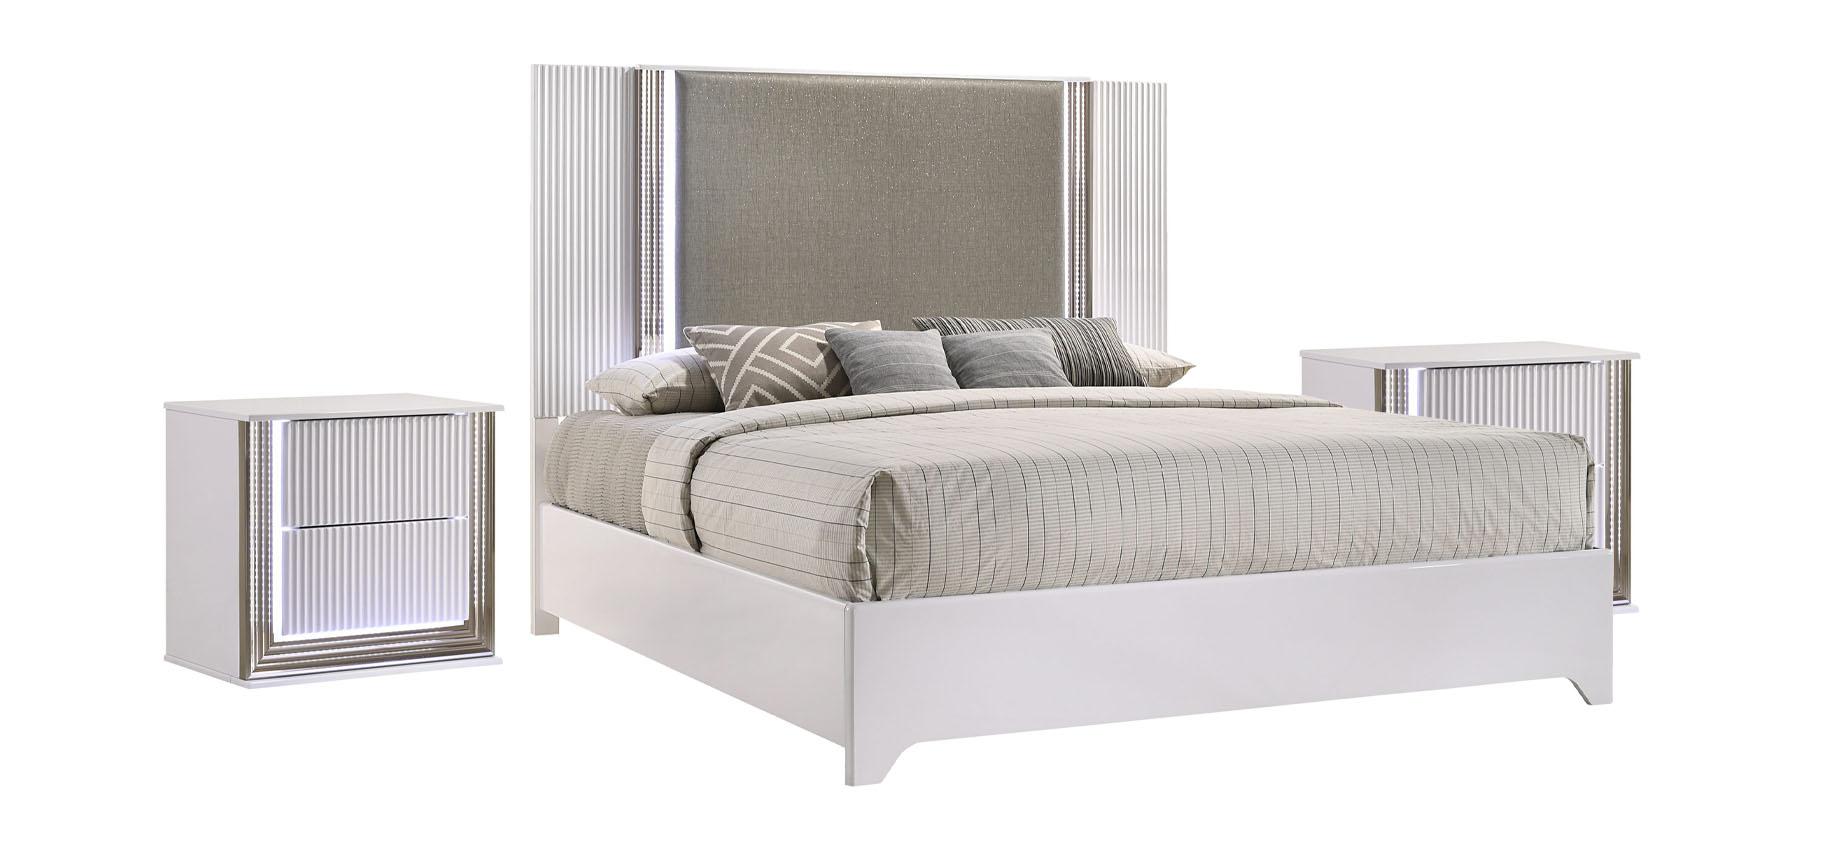 Modern Platform Bedroom Set ASPEN ASPEN-WH-QB-Set-3 in White Faux Leather